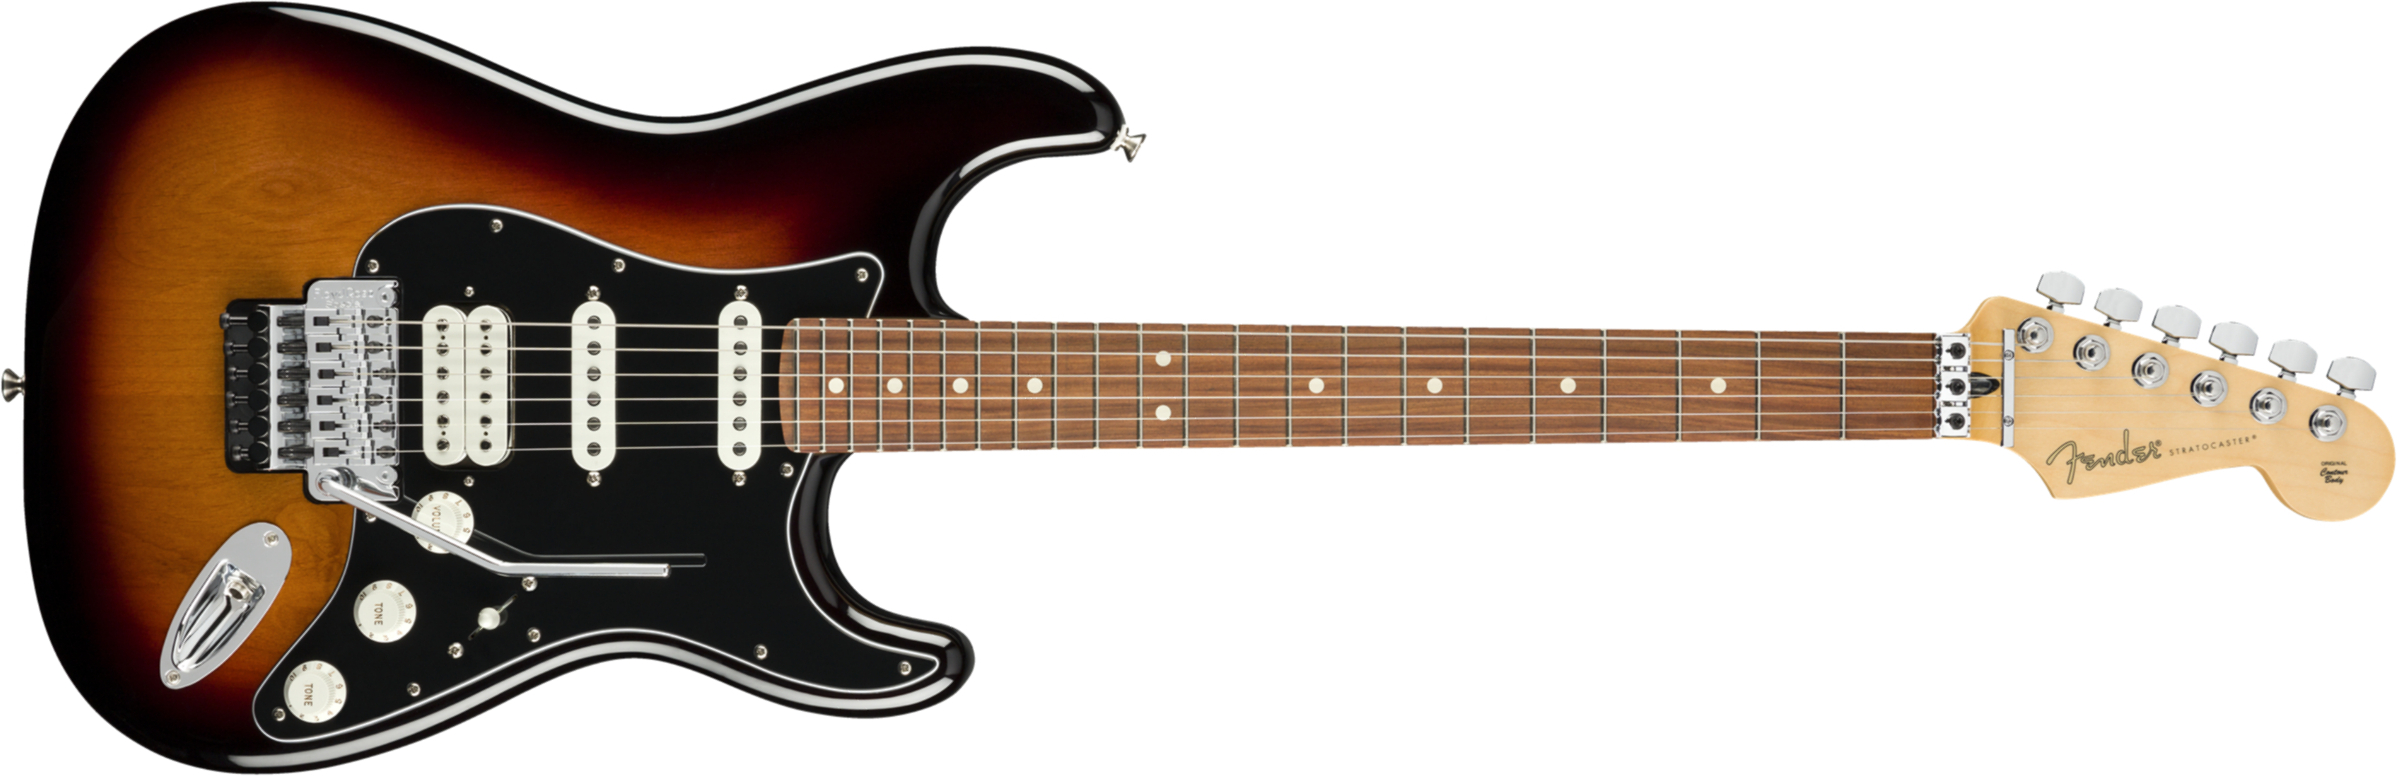 Fender Strat Player Floyd Rose Mex Hss Fr Pf - 3-color Sunburst - Str shape electric guitar - Main picture